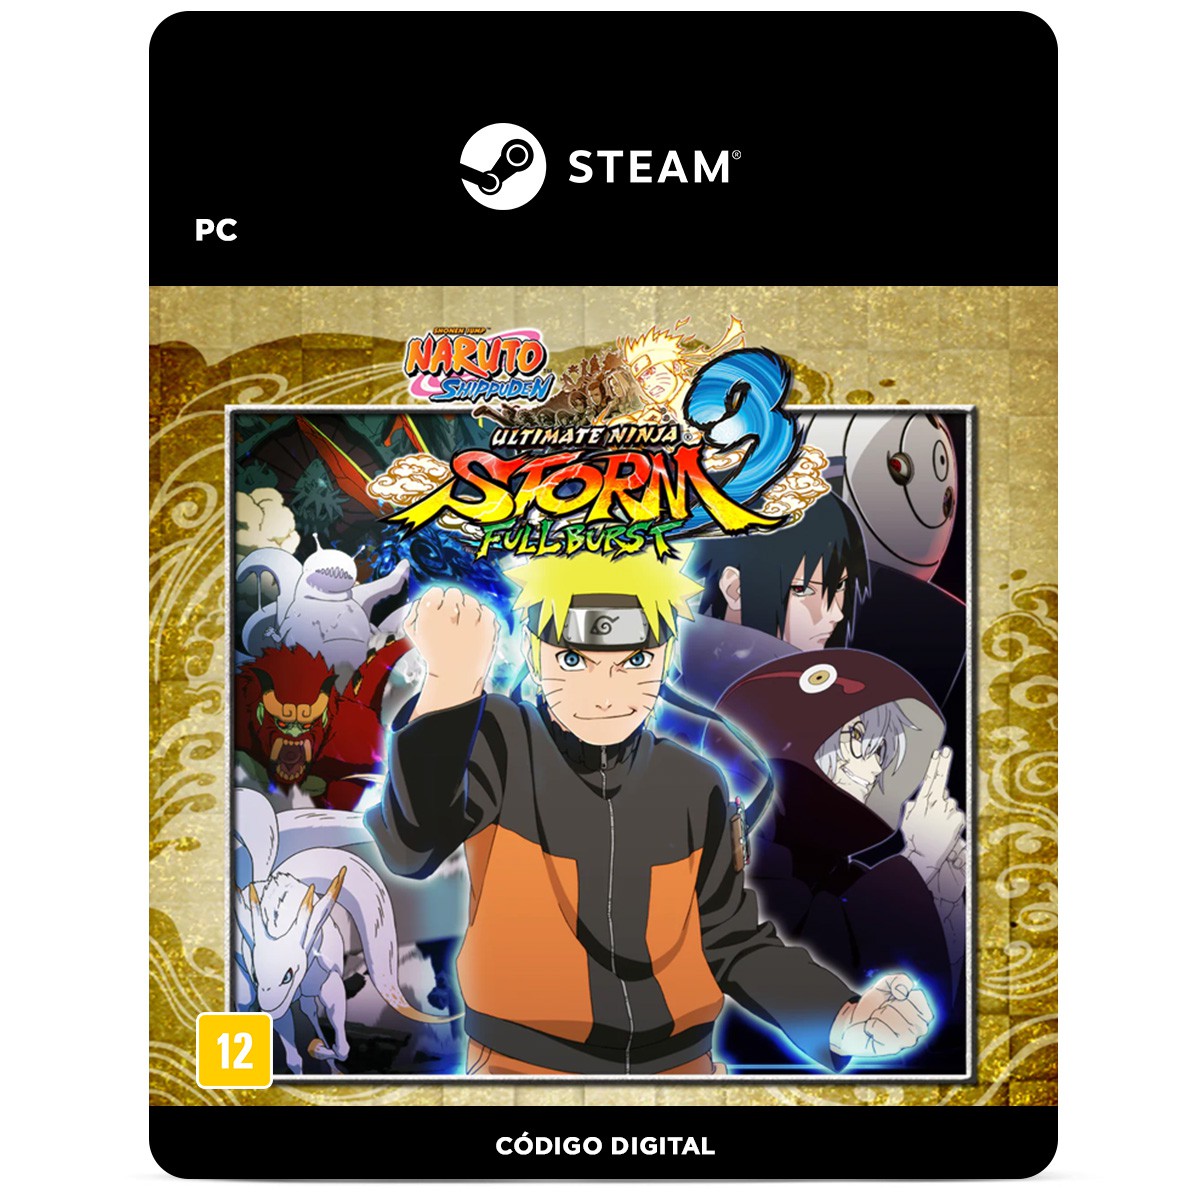 Requisitos mínimos para rodar Naruto Shippuden: Ultimate Ninja Storm 4